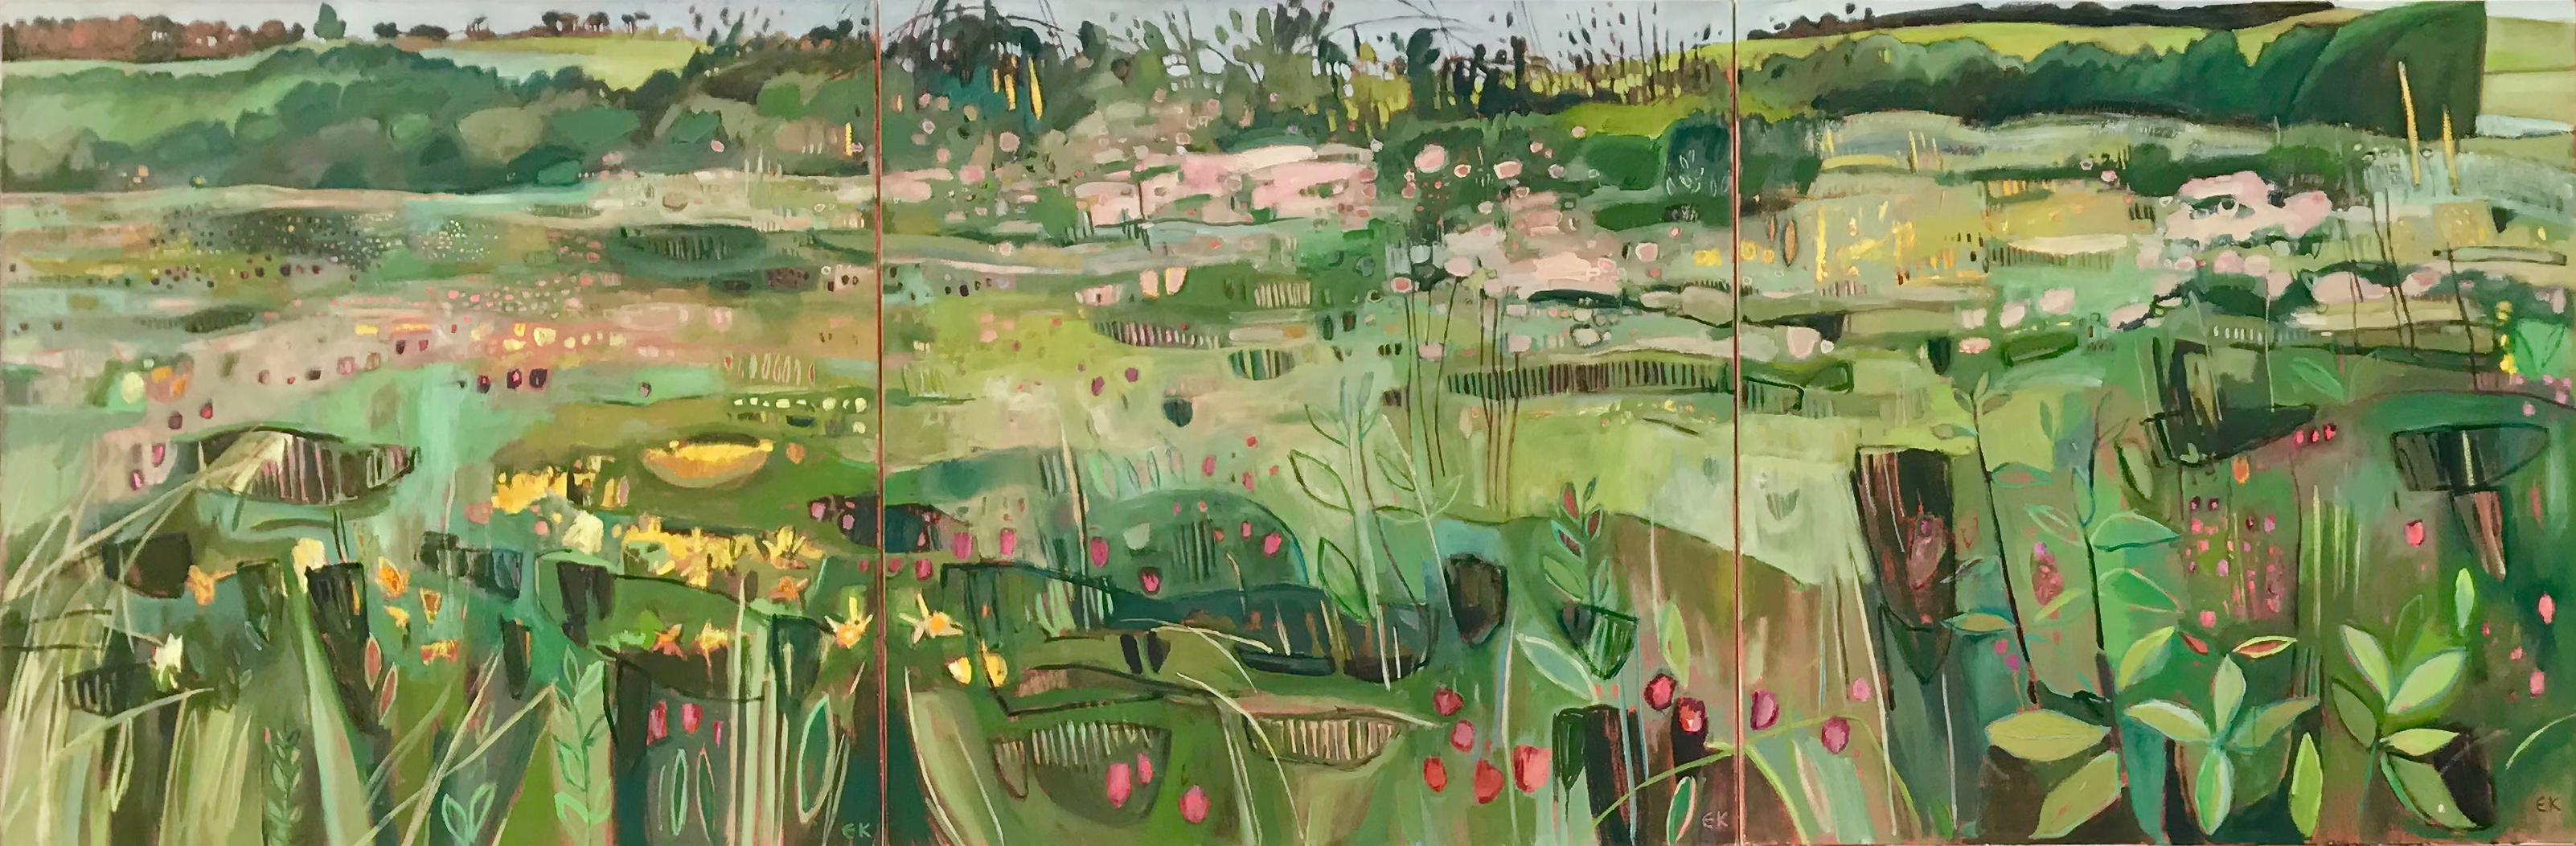 Elaine Kazimierczuk Landscape Painting - Tackley Triptych Revisited, Acrylic paint on canvas, Abstract, Landscape, Floral